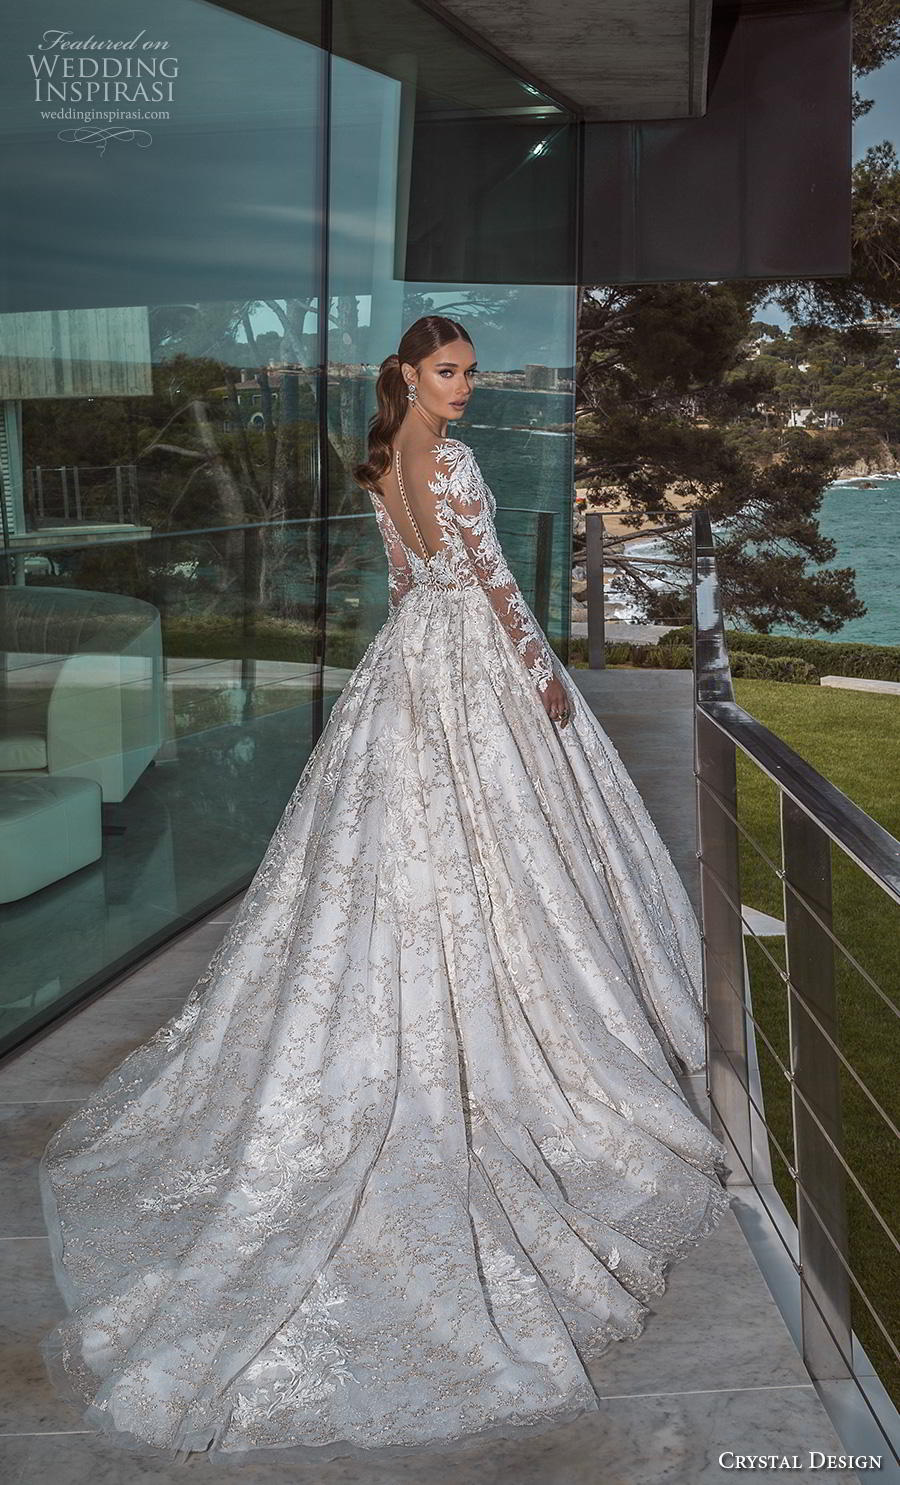 2019 wedding dress designs